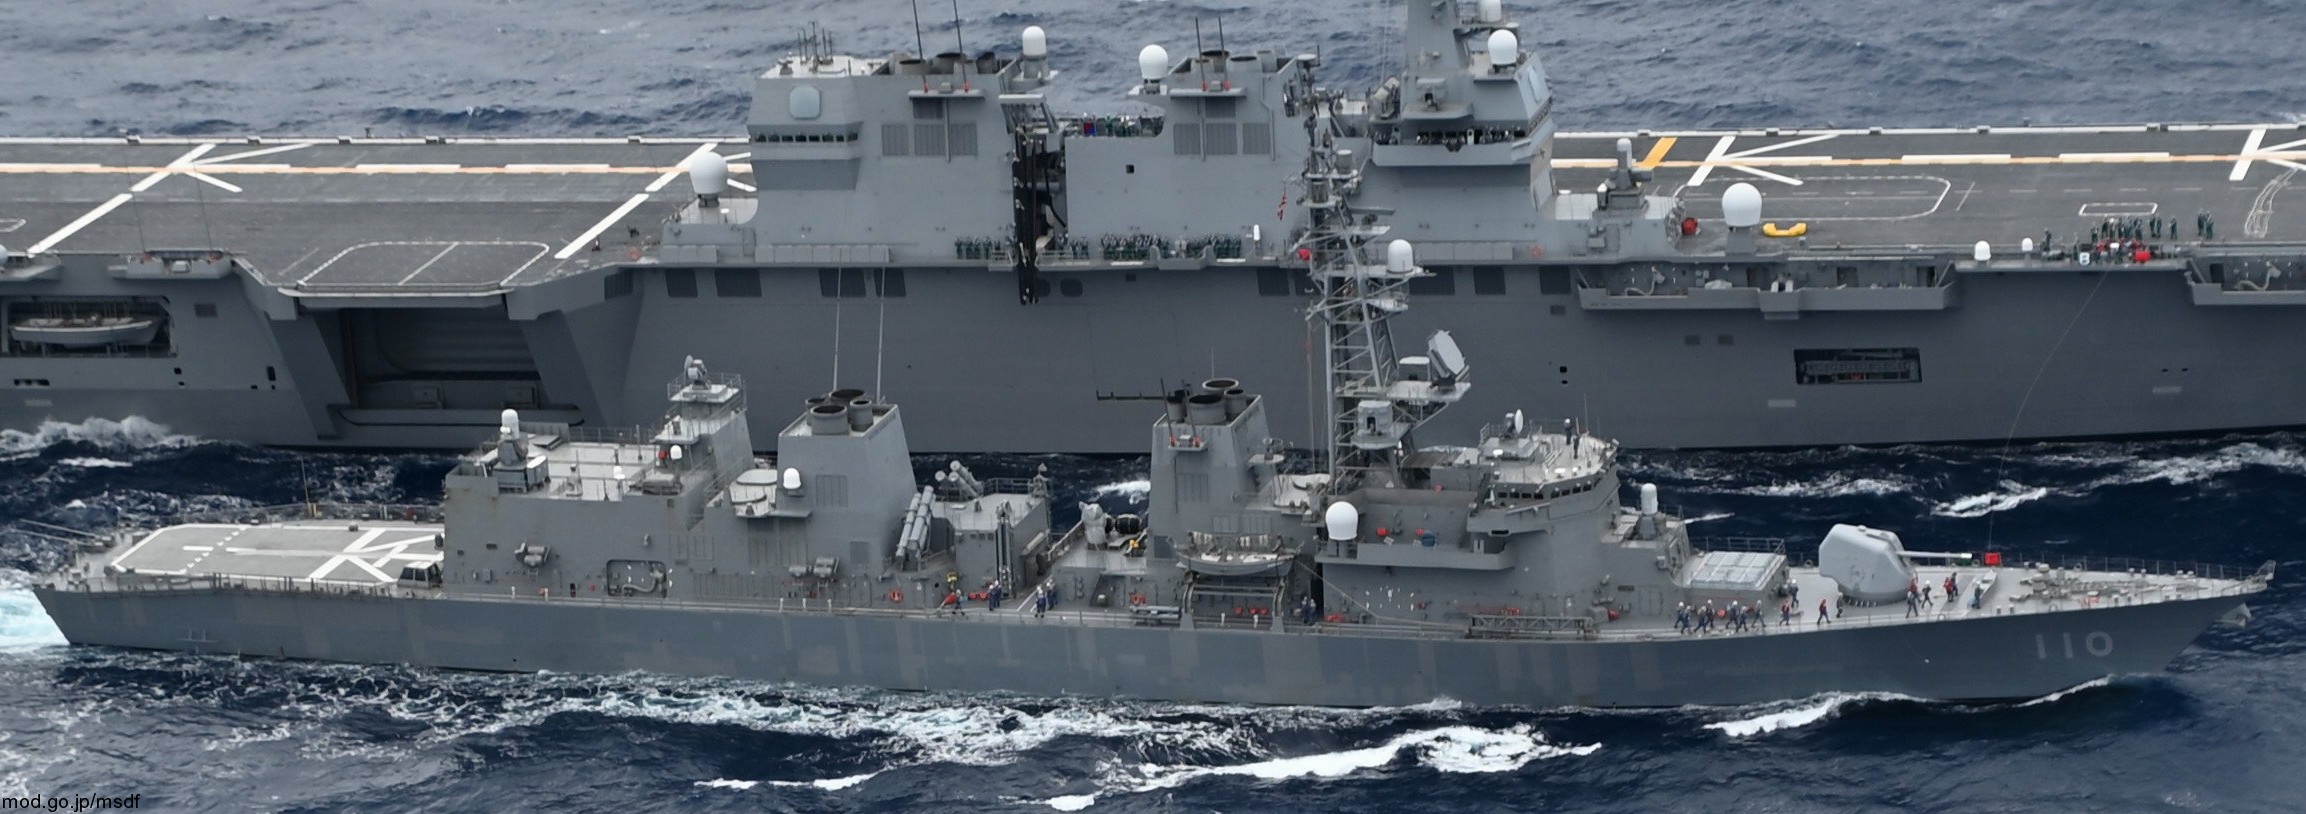 dd-110 js takanami class destroyer japan maritime self defense force jmsdf 30